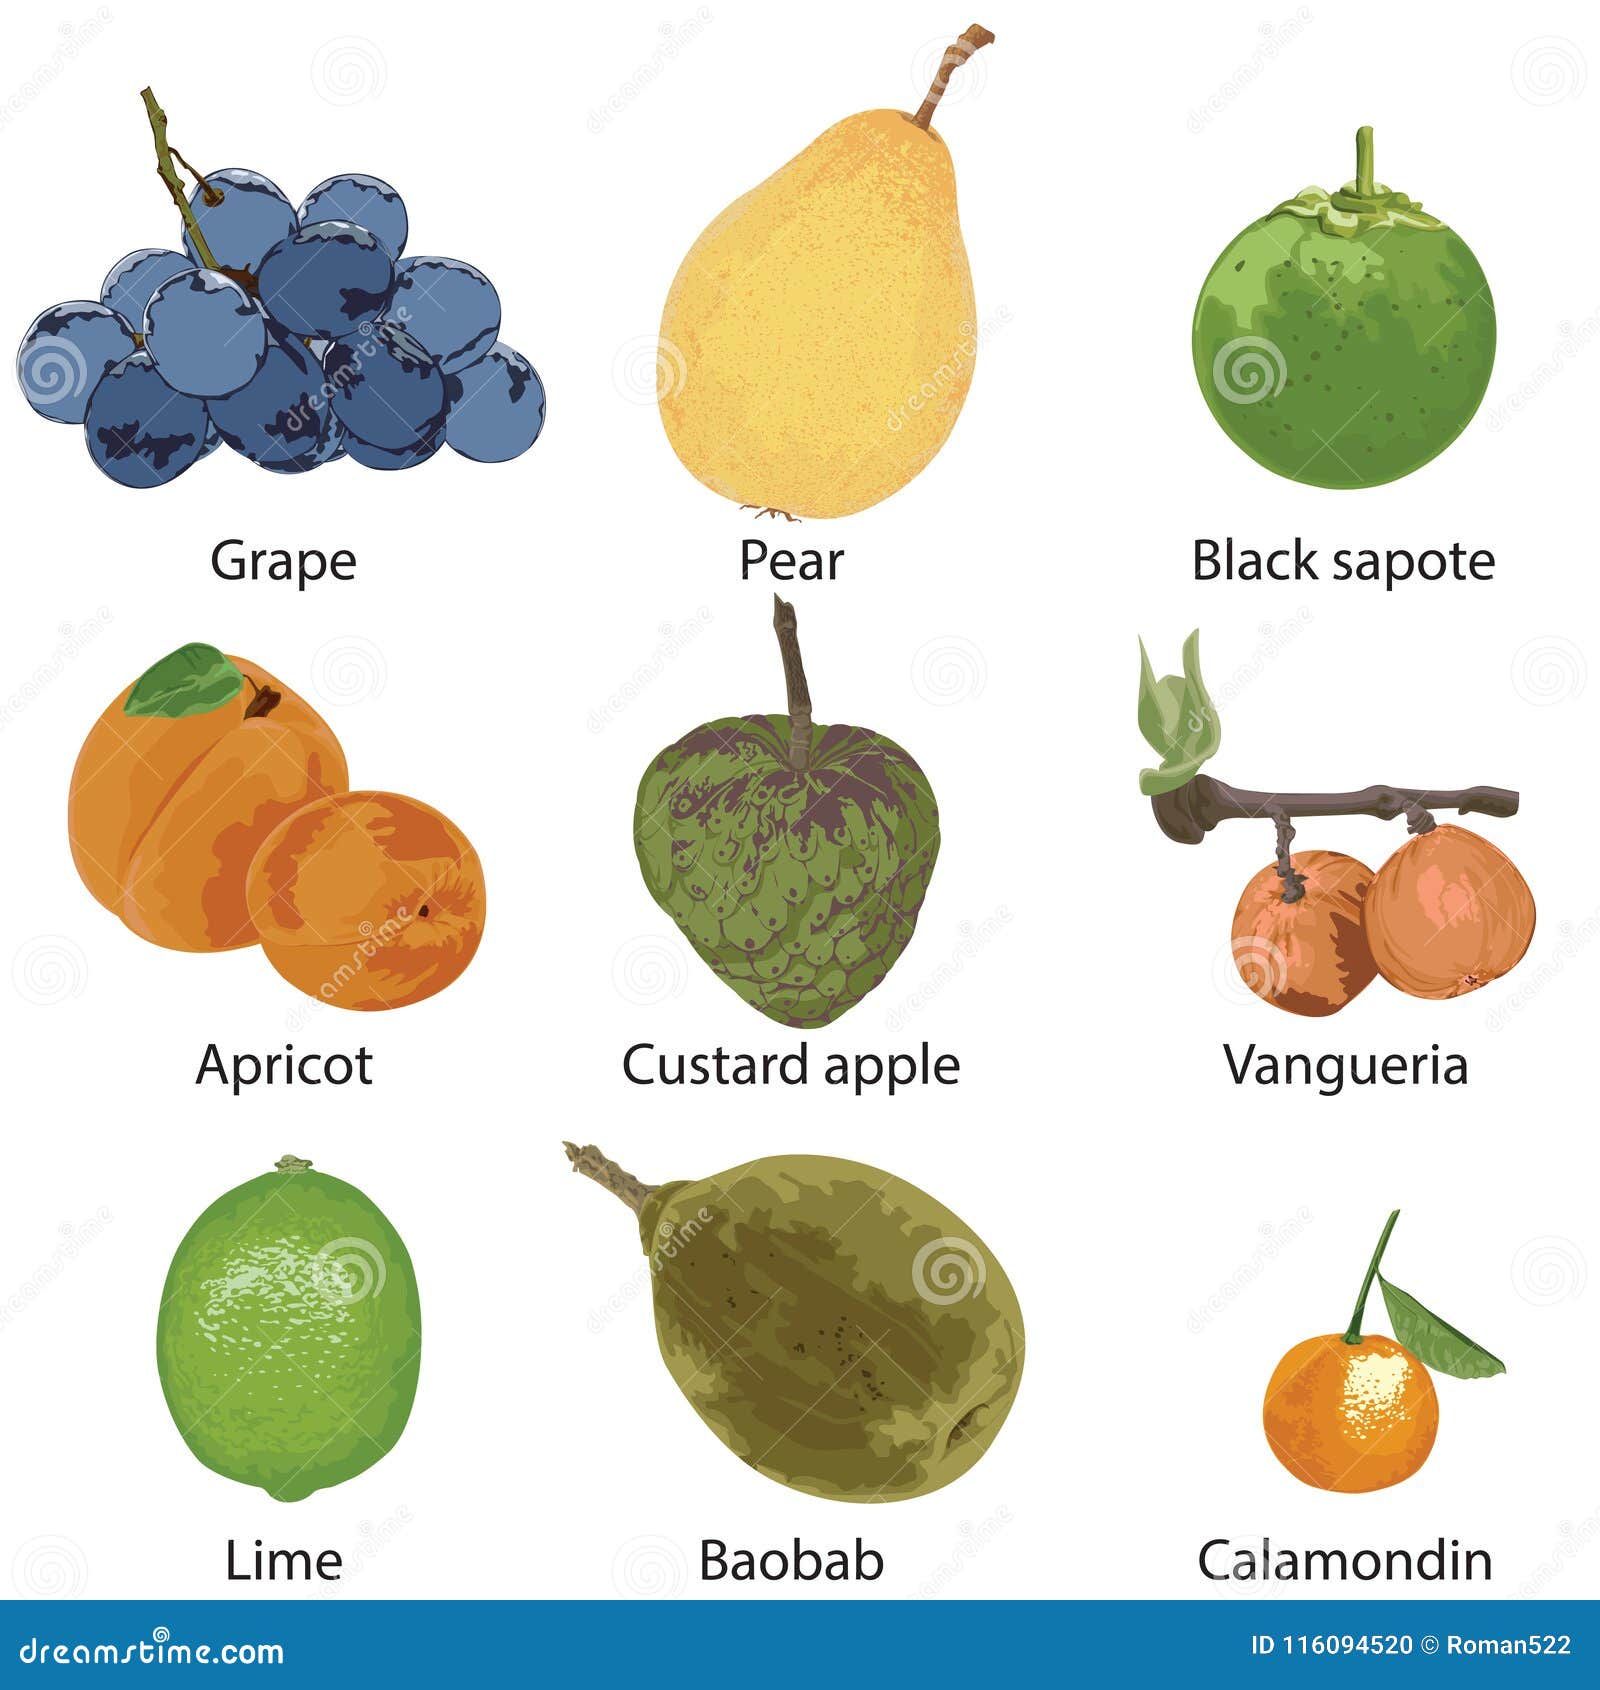 Grape pear. Вангерия фрукт. Одноразка grape Pear. Ной фрукт на белом фоне. Одноразка виноград груша.